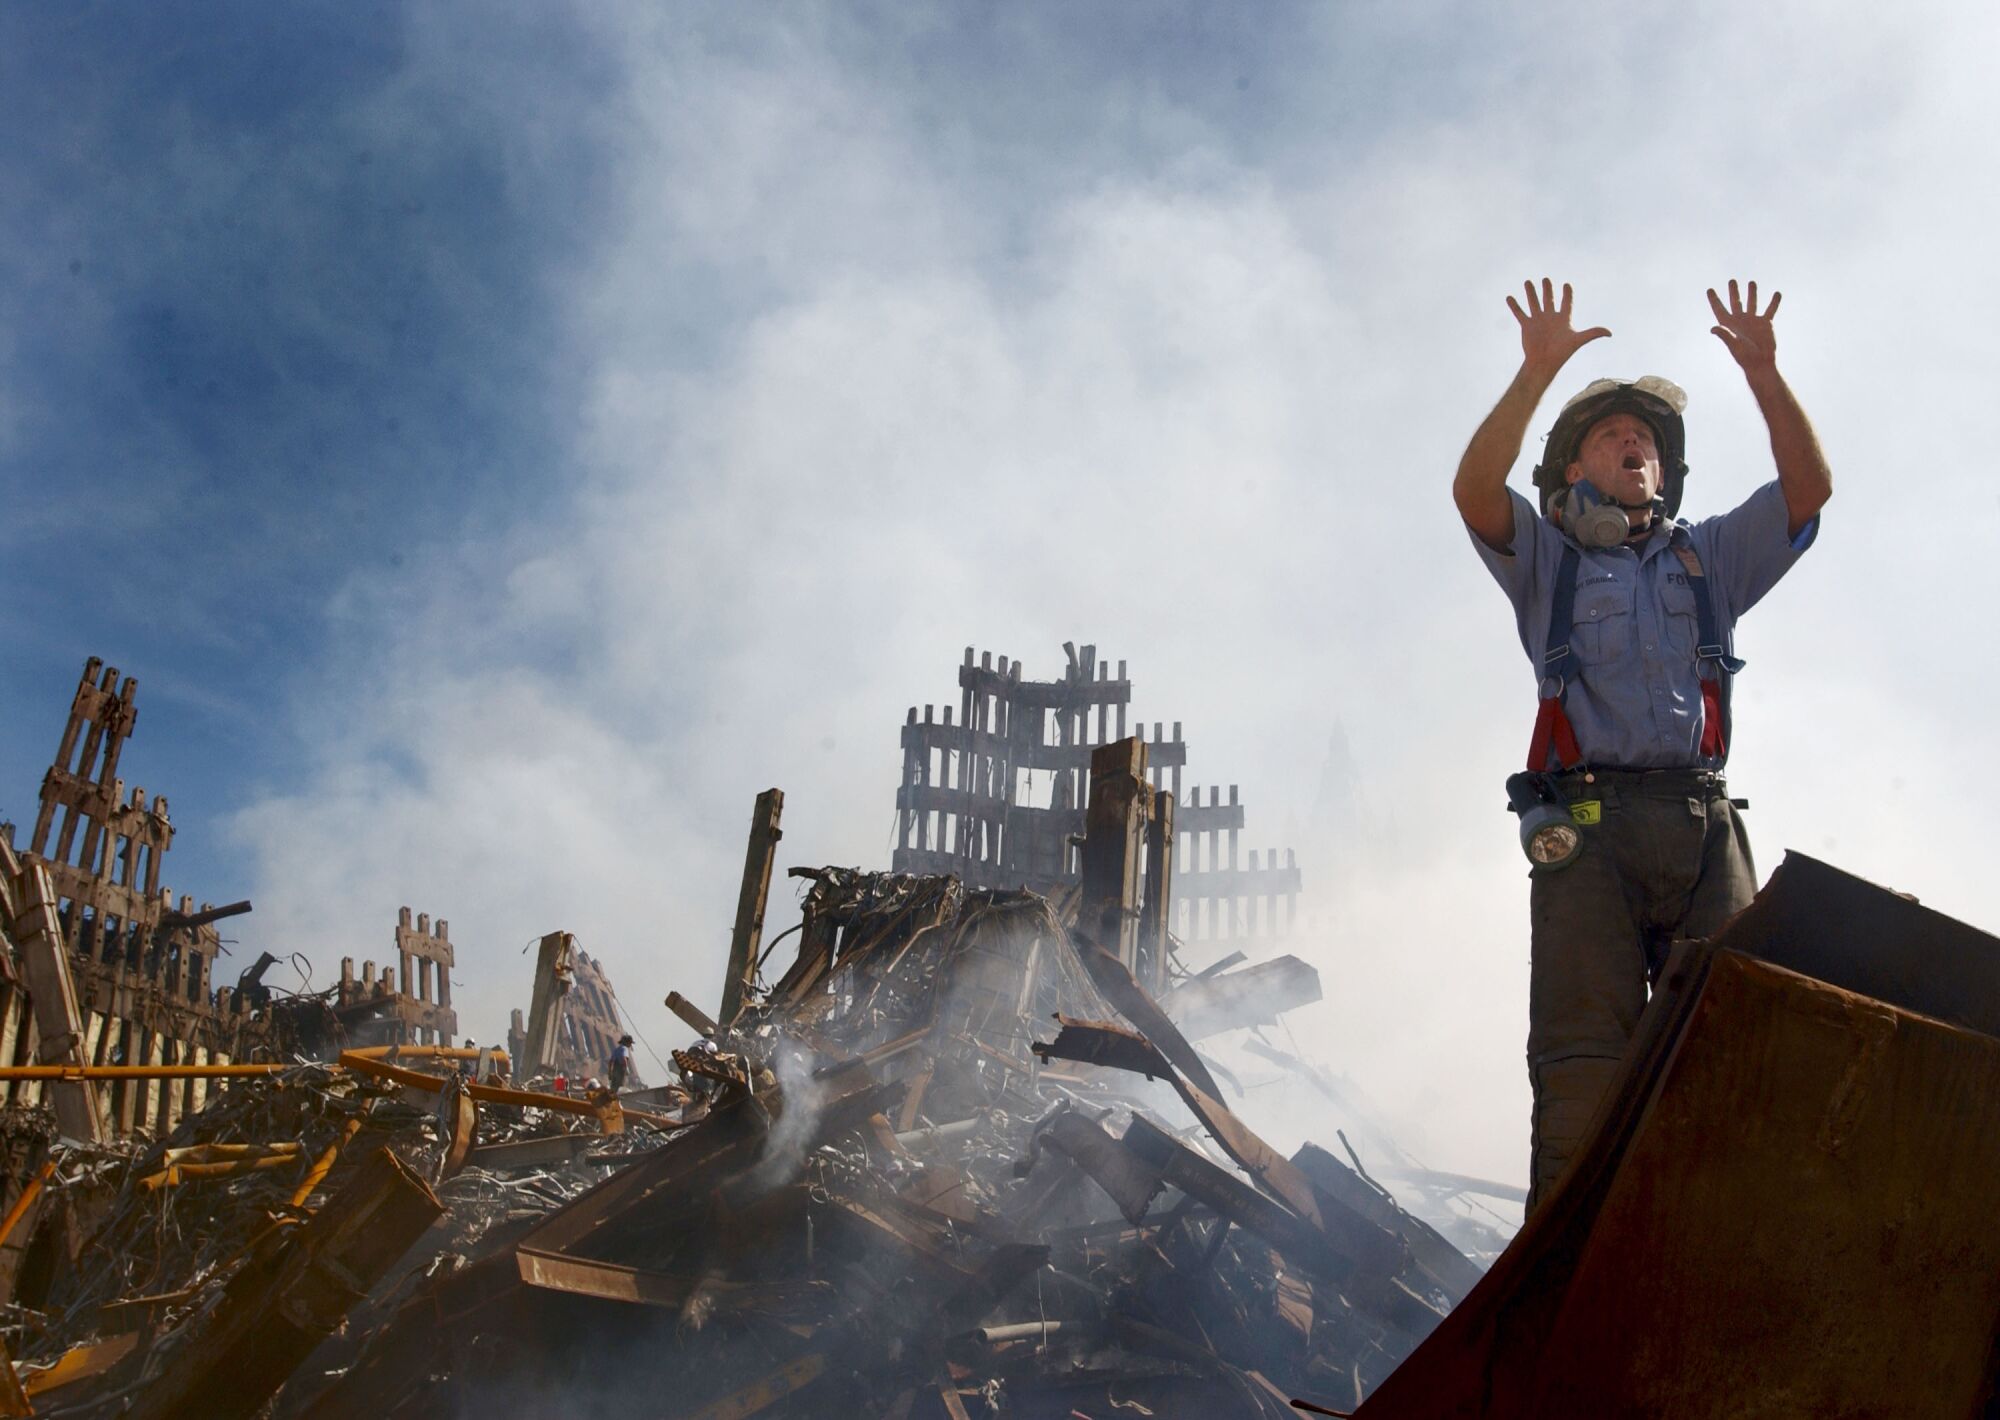 A firefighter holds up 10 fingers, standing before smoldering debris